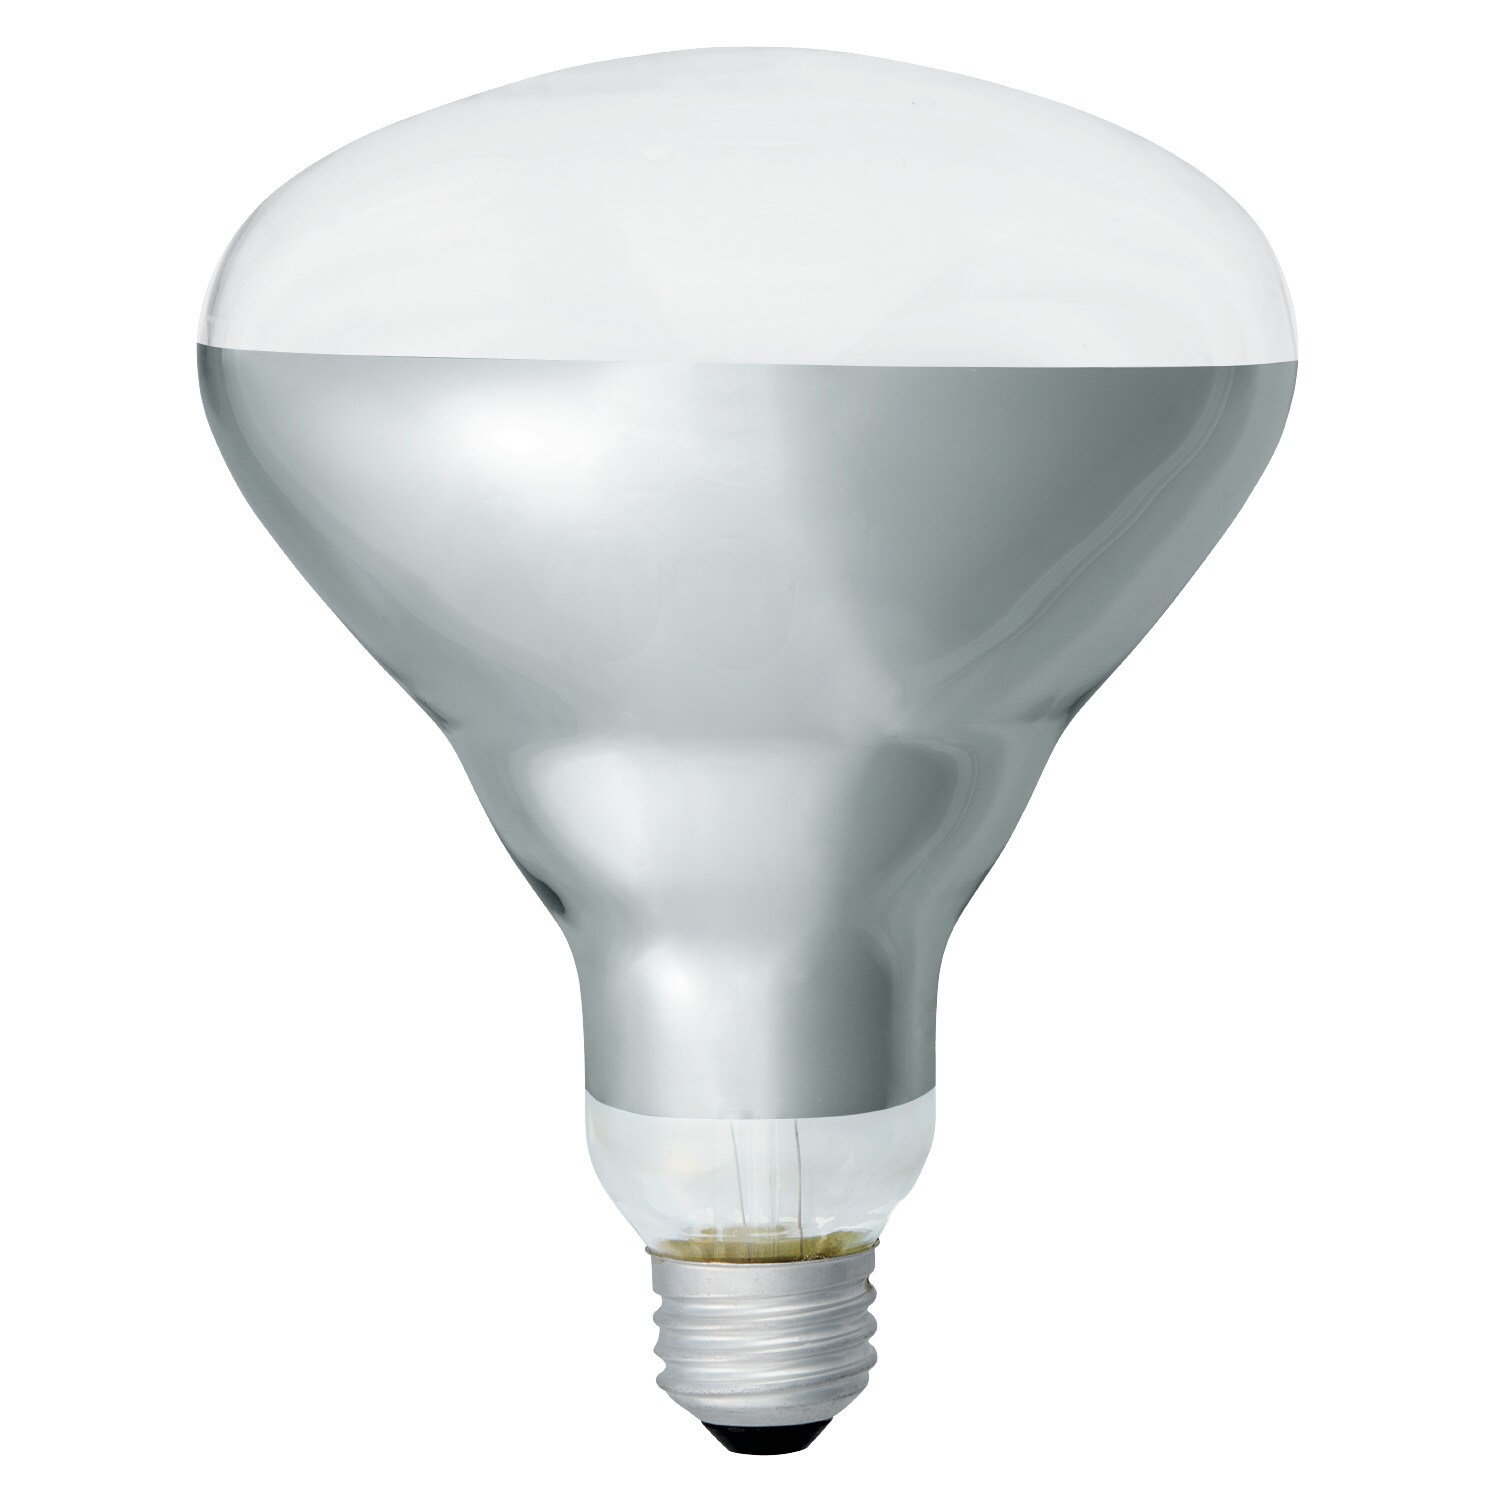 Ge Current 250R40/1/Stg Ge Lighting 250W R40 Incandescent Heat Light Bulb 